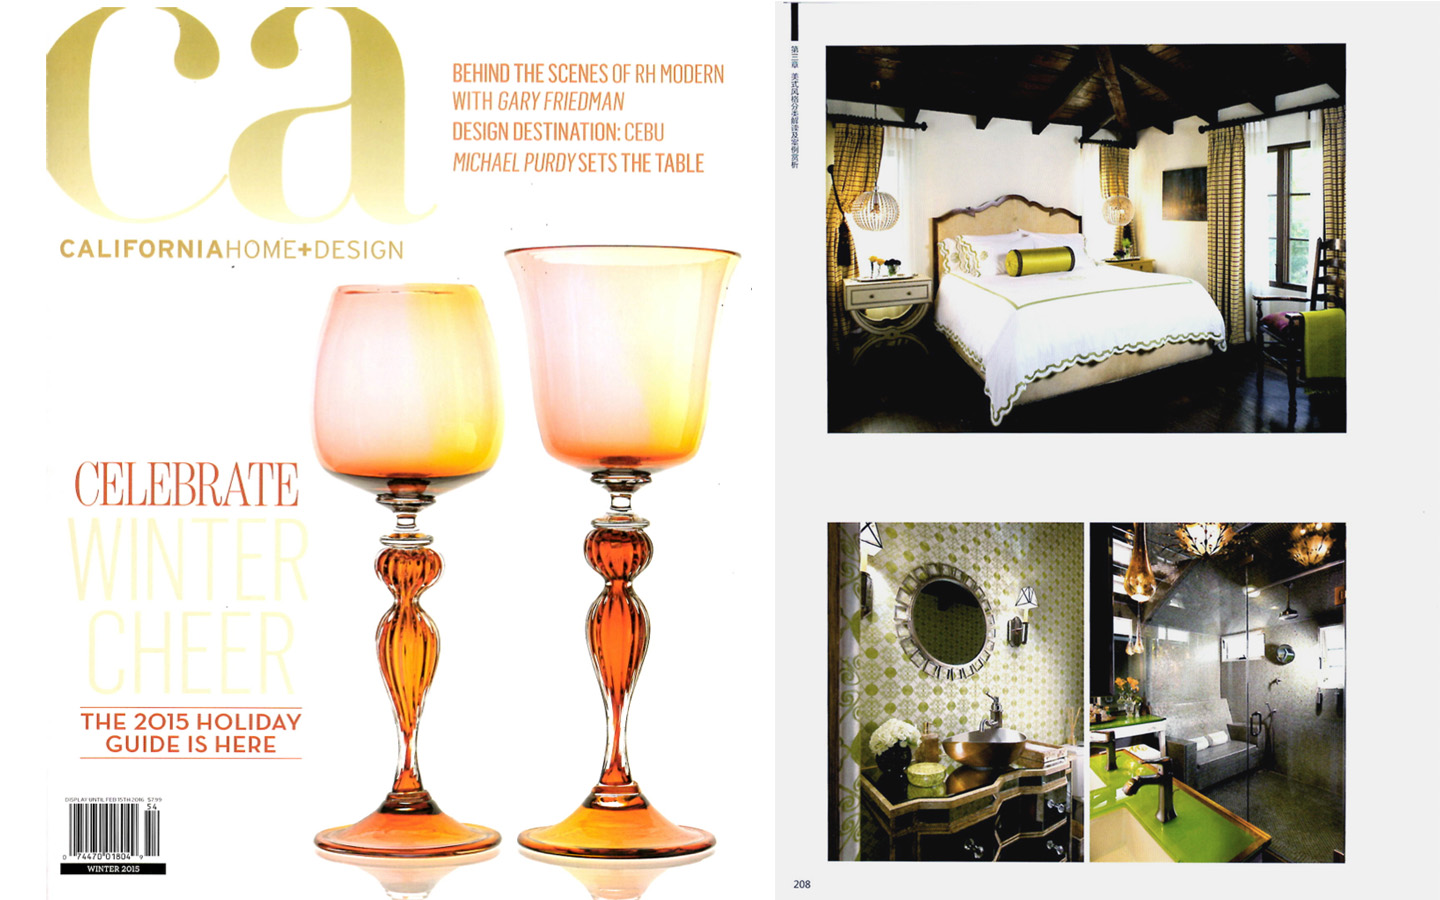 California Home and Design Magazine Spread Featuring Celebrity Designer Lori Dennis